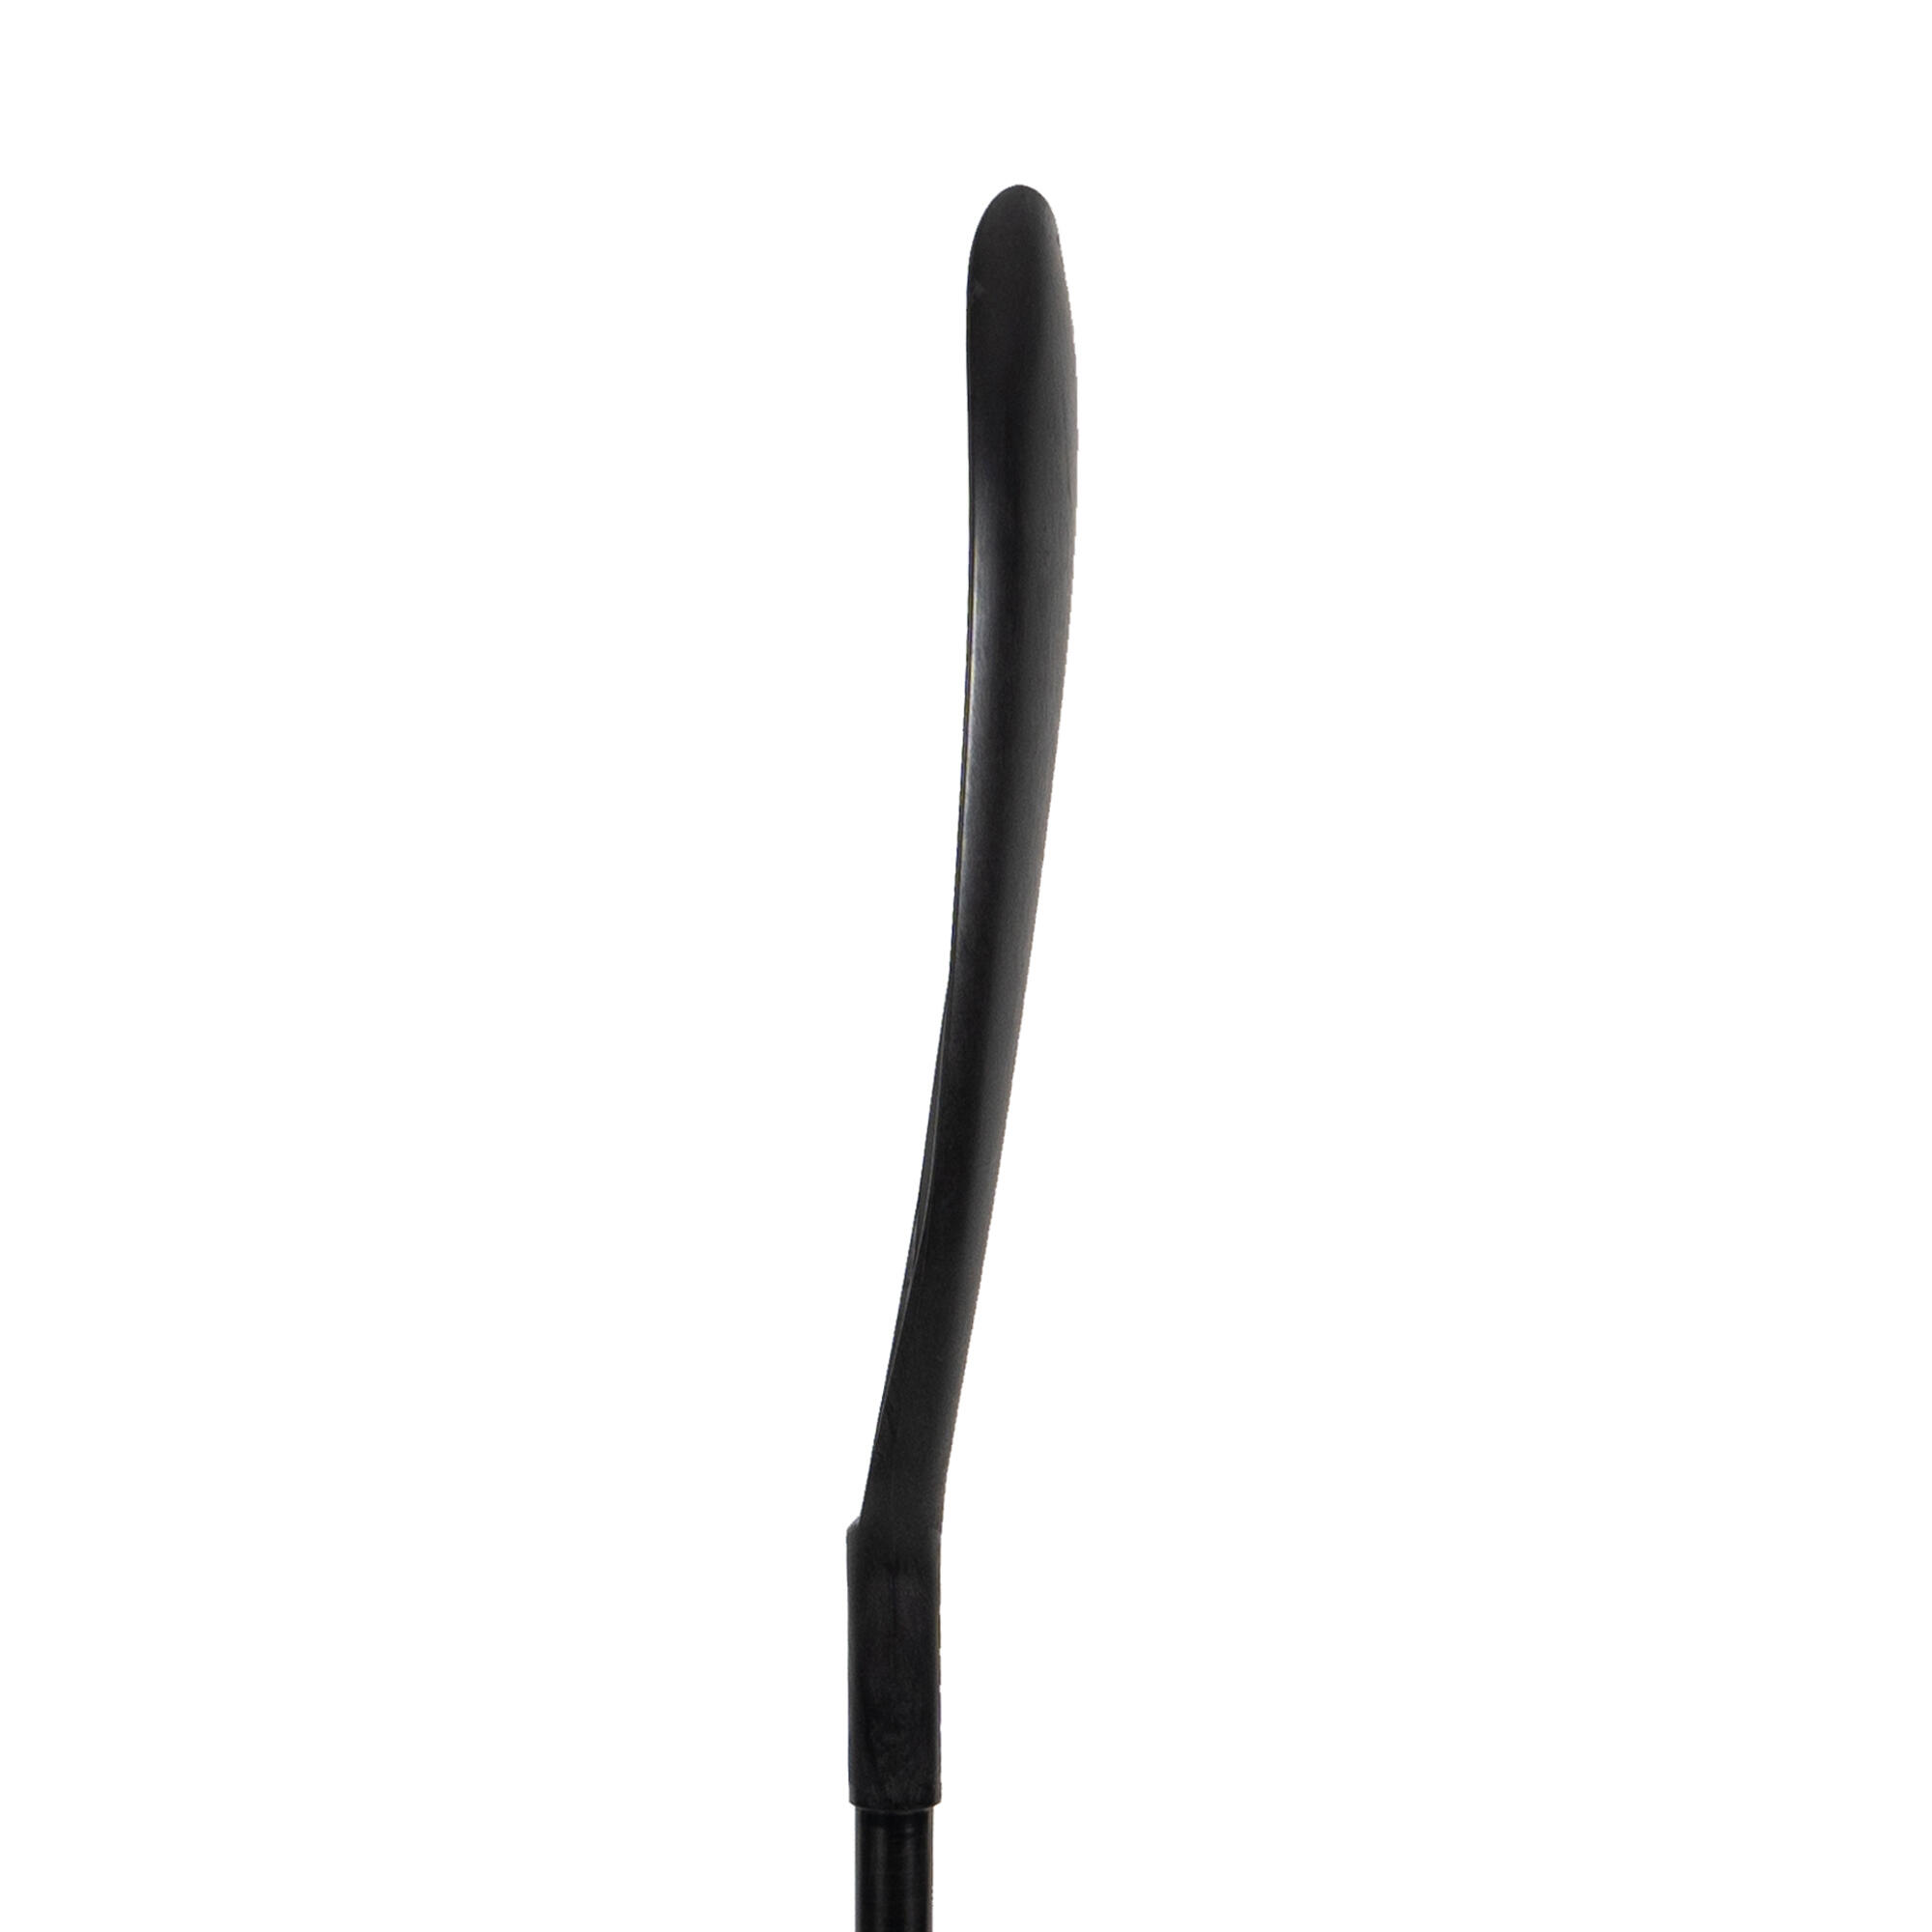 Kayak spoon paddle - carbon and fibreglass - adjustable / 2 sections - Rotomod 4/13